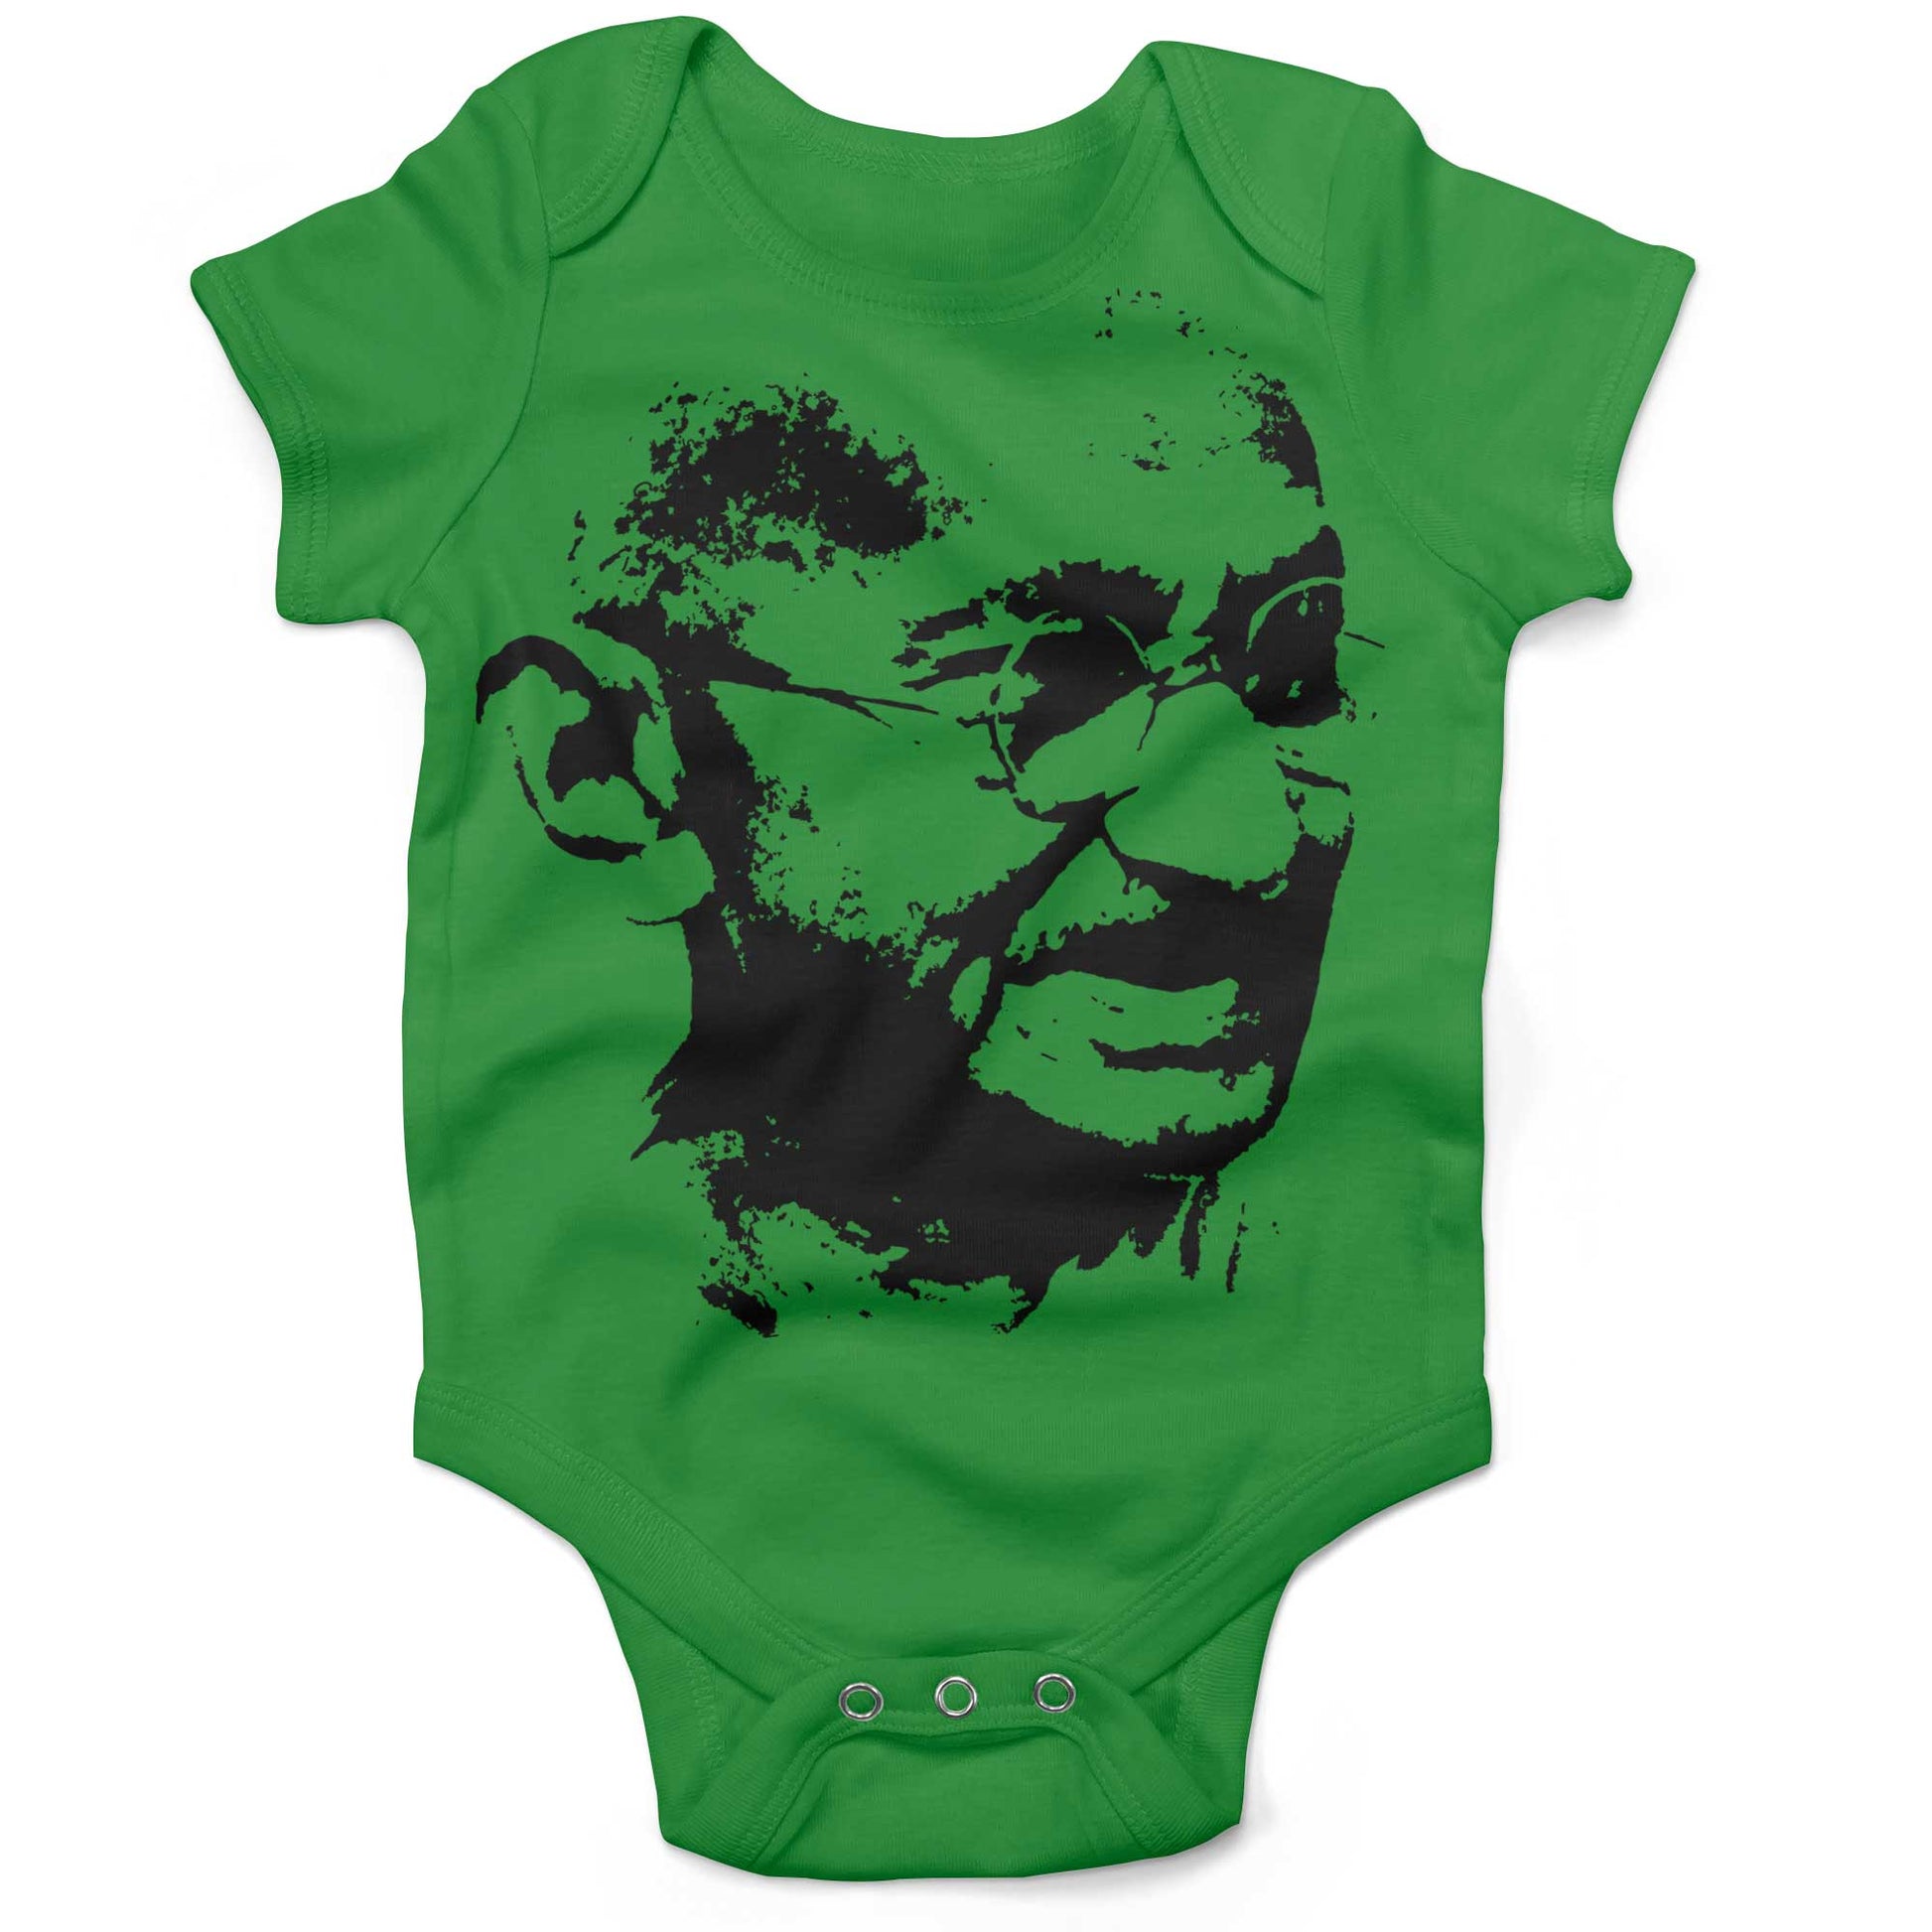 Mahatma Gandhi Be The Change Infant Bodysuit or Raglan Baby Tee-Grass Green-3-6 months